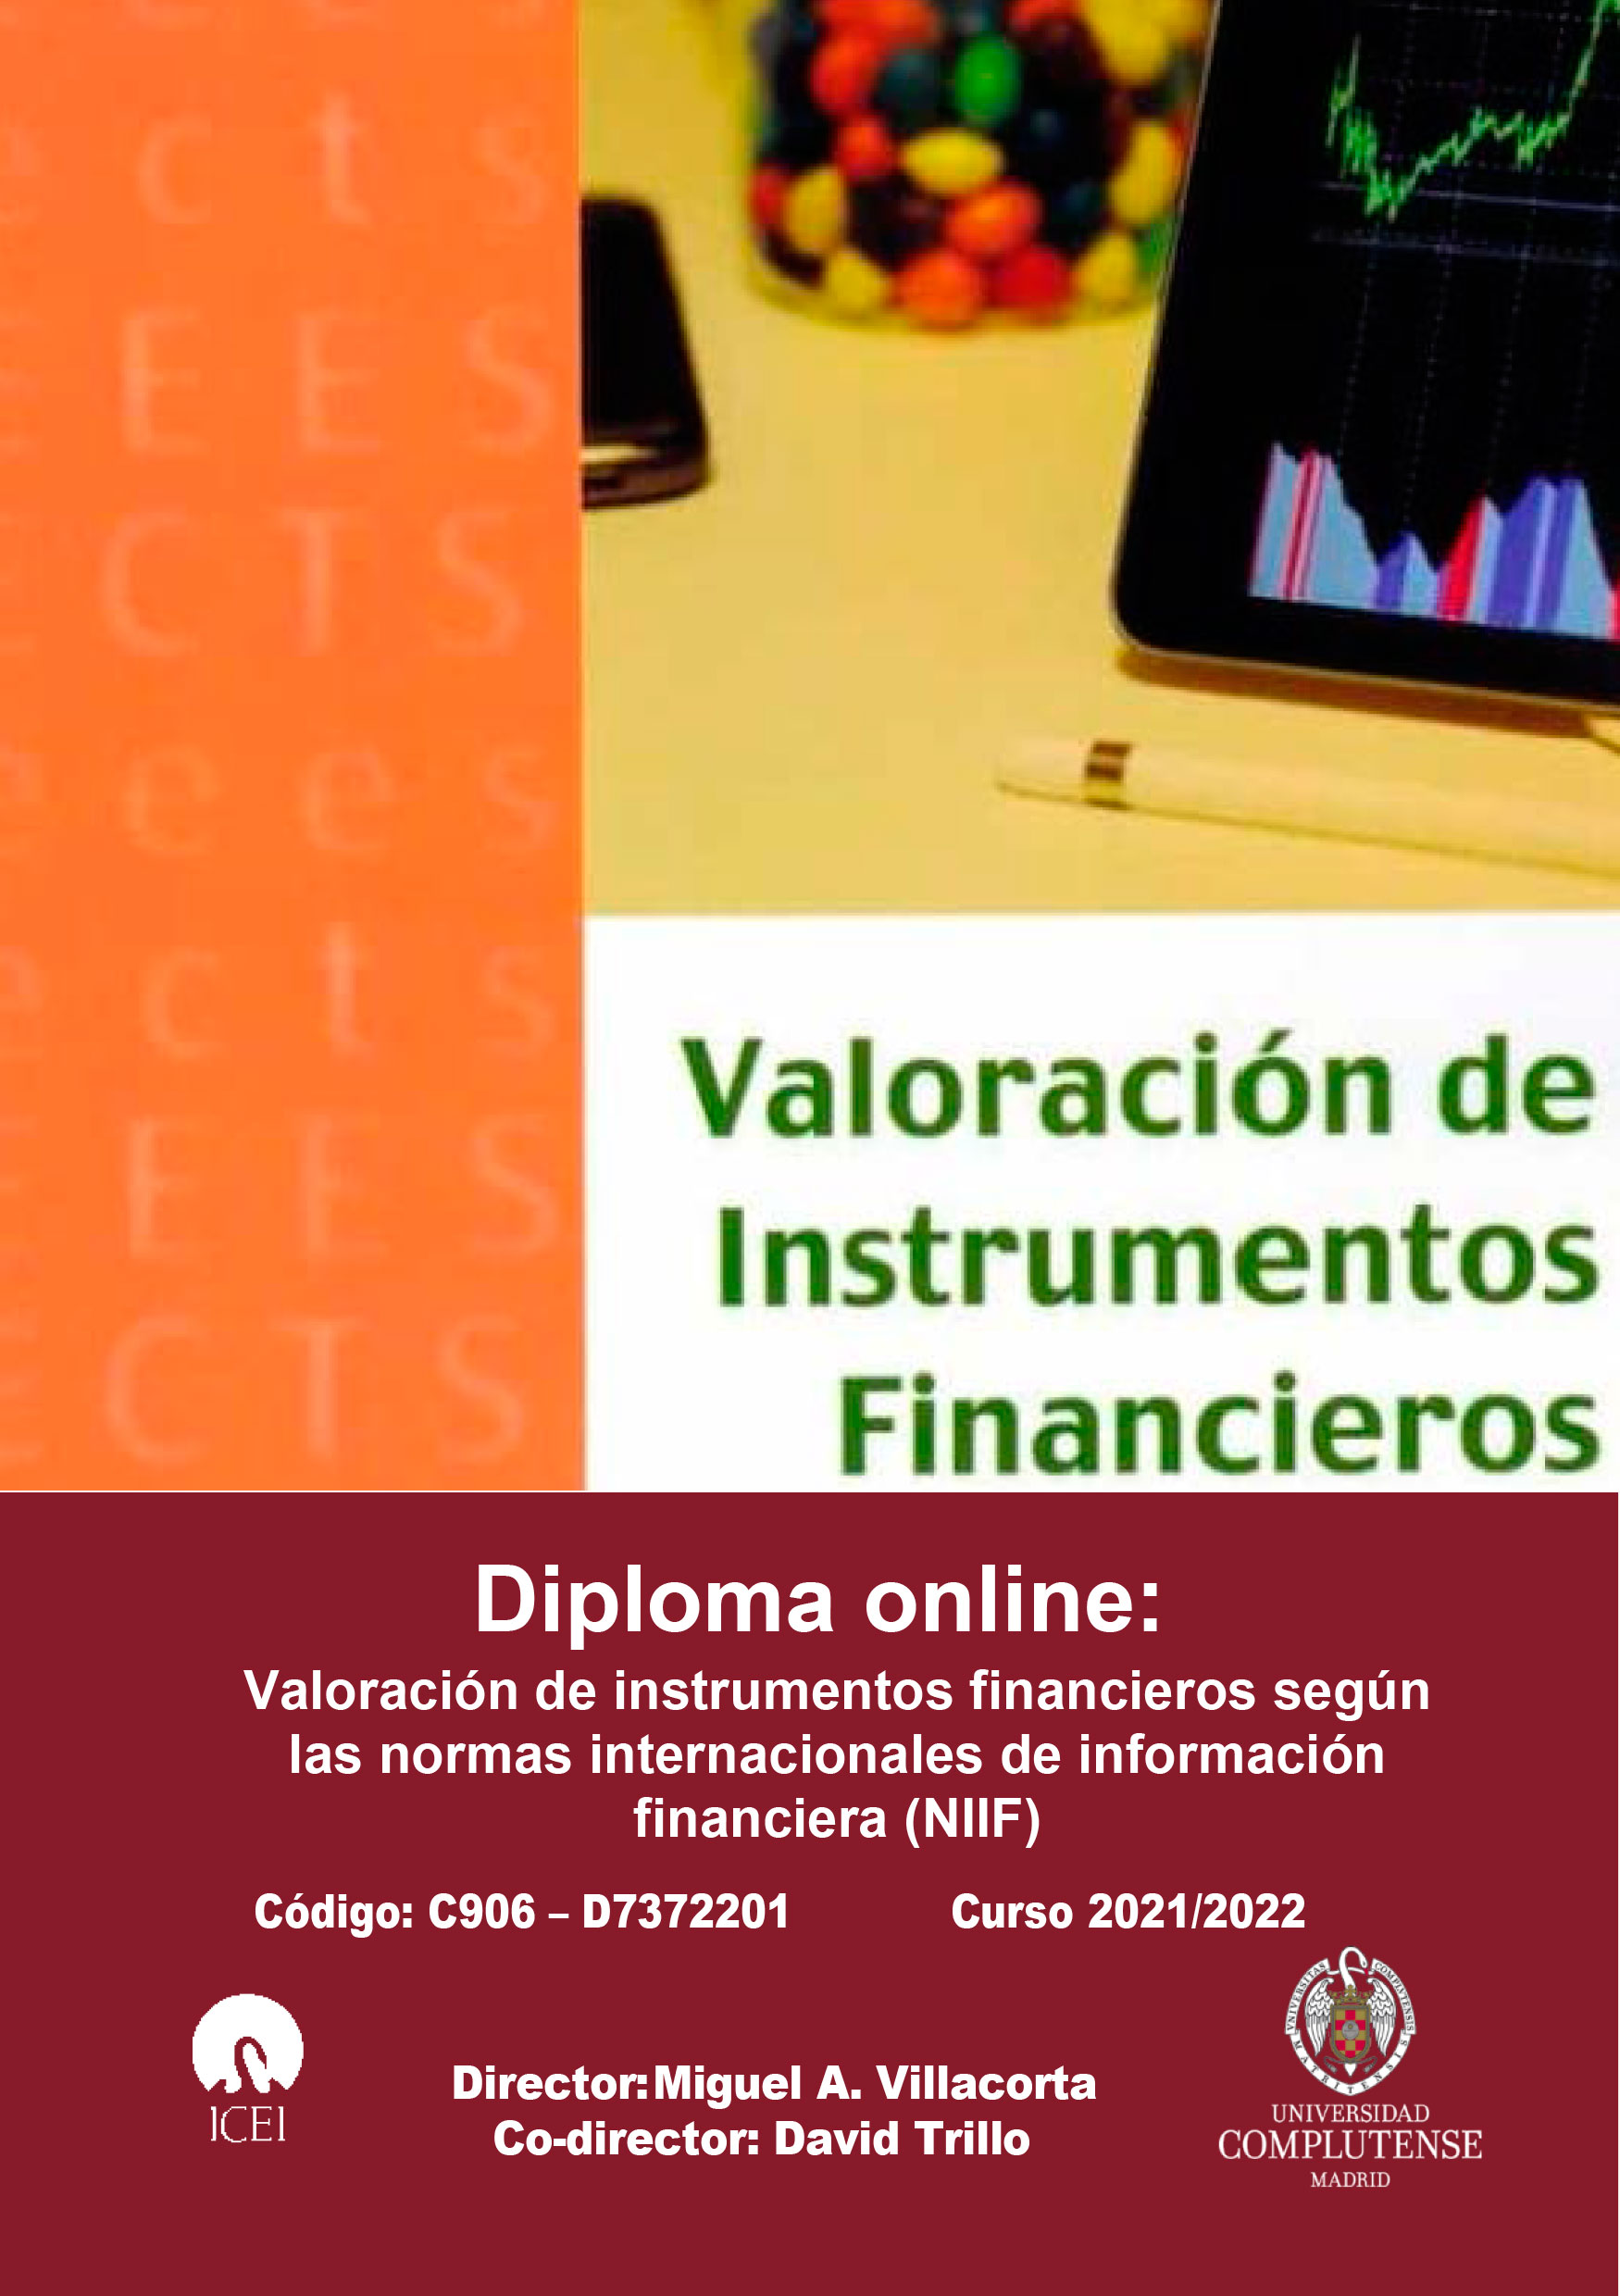 diptico-valoracion-instrumentos-financieross-1